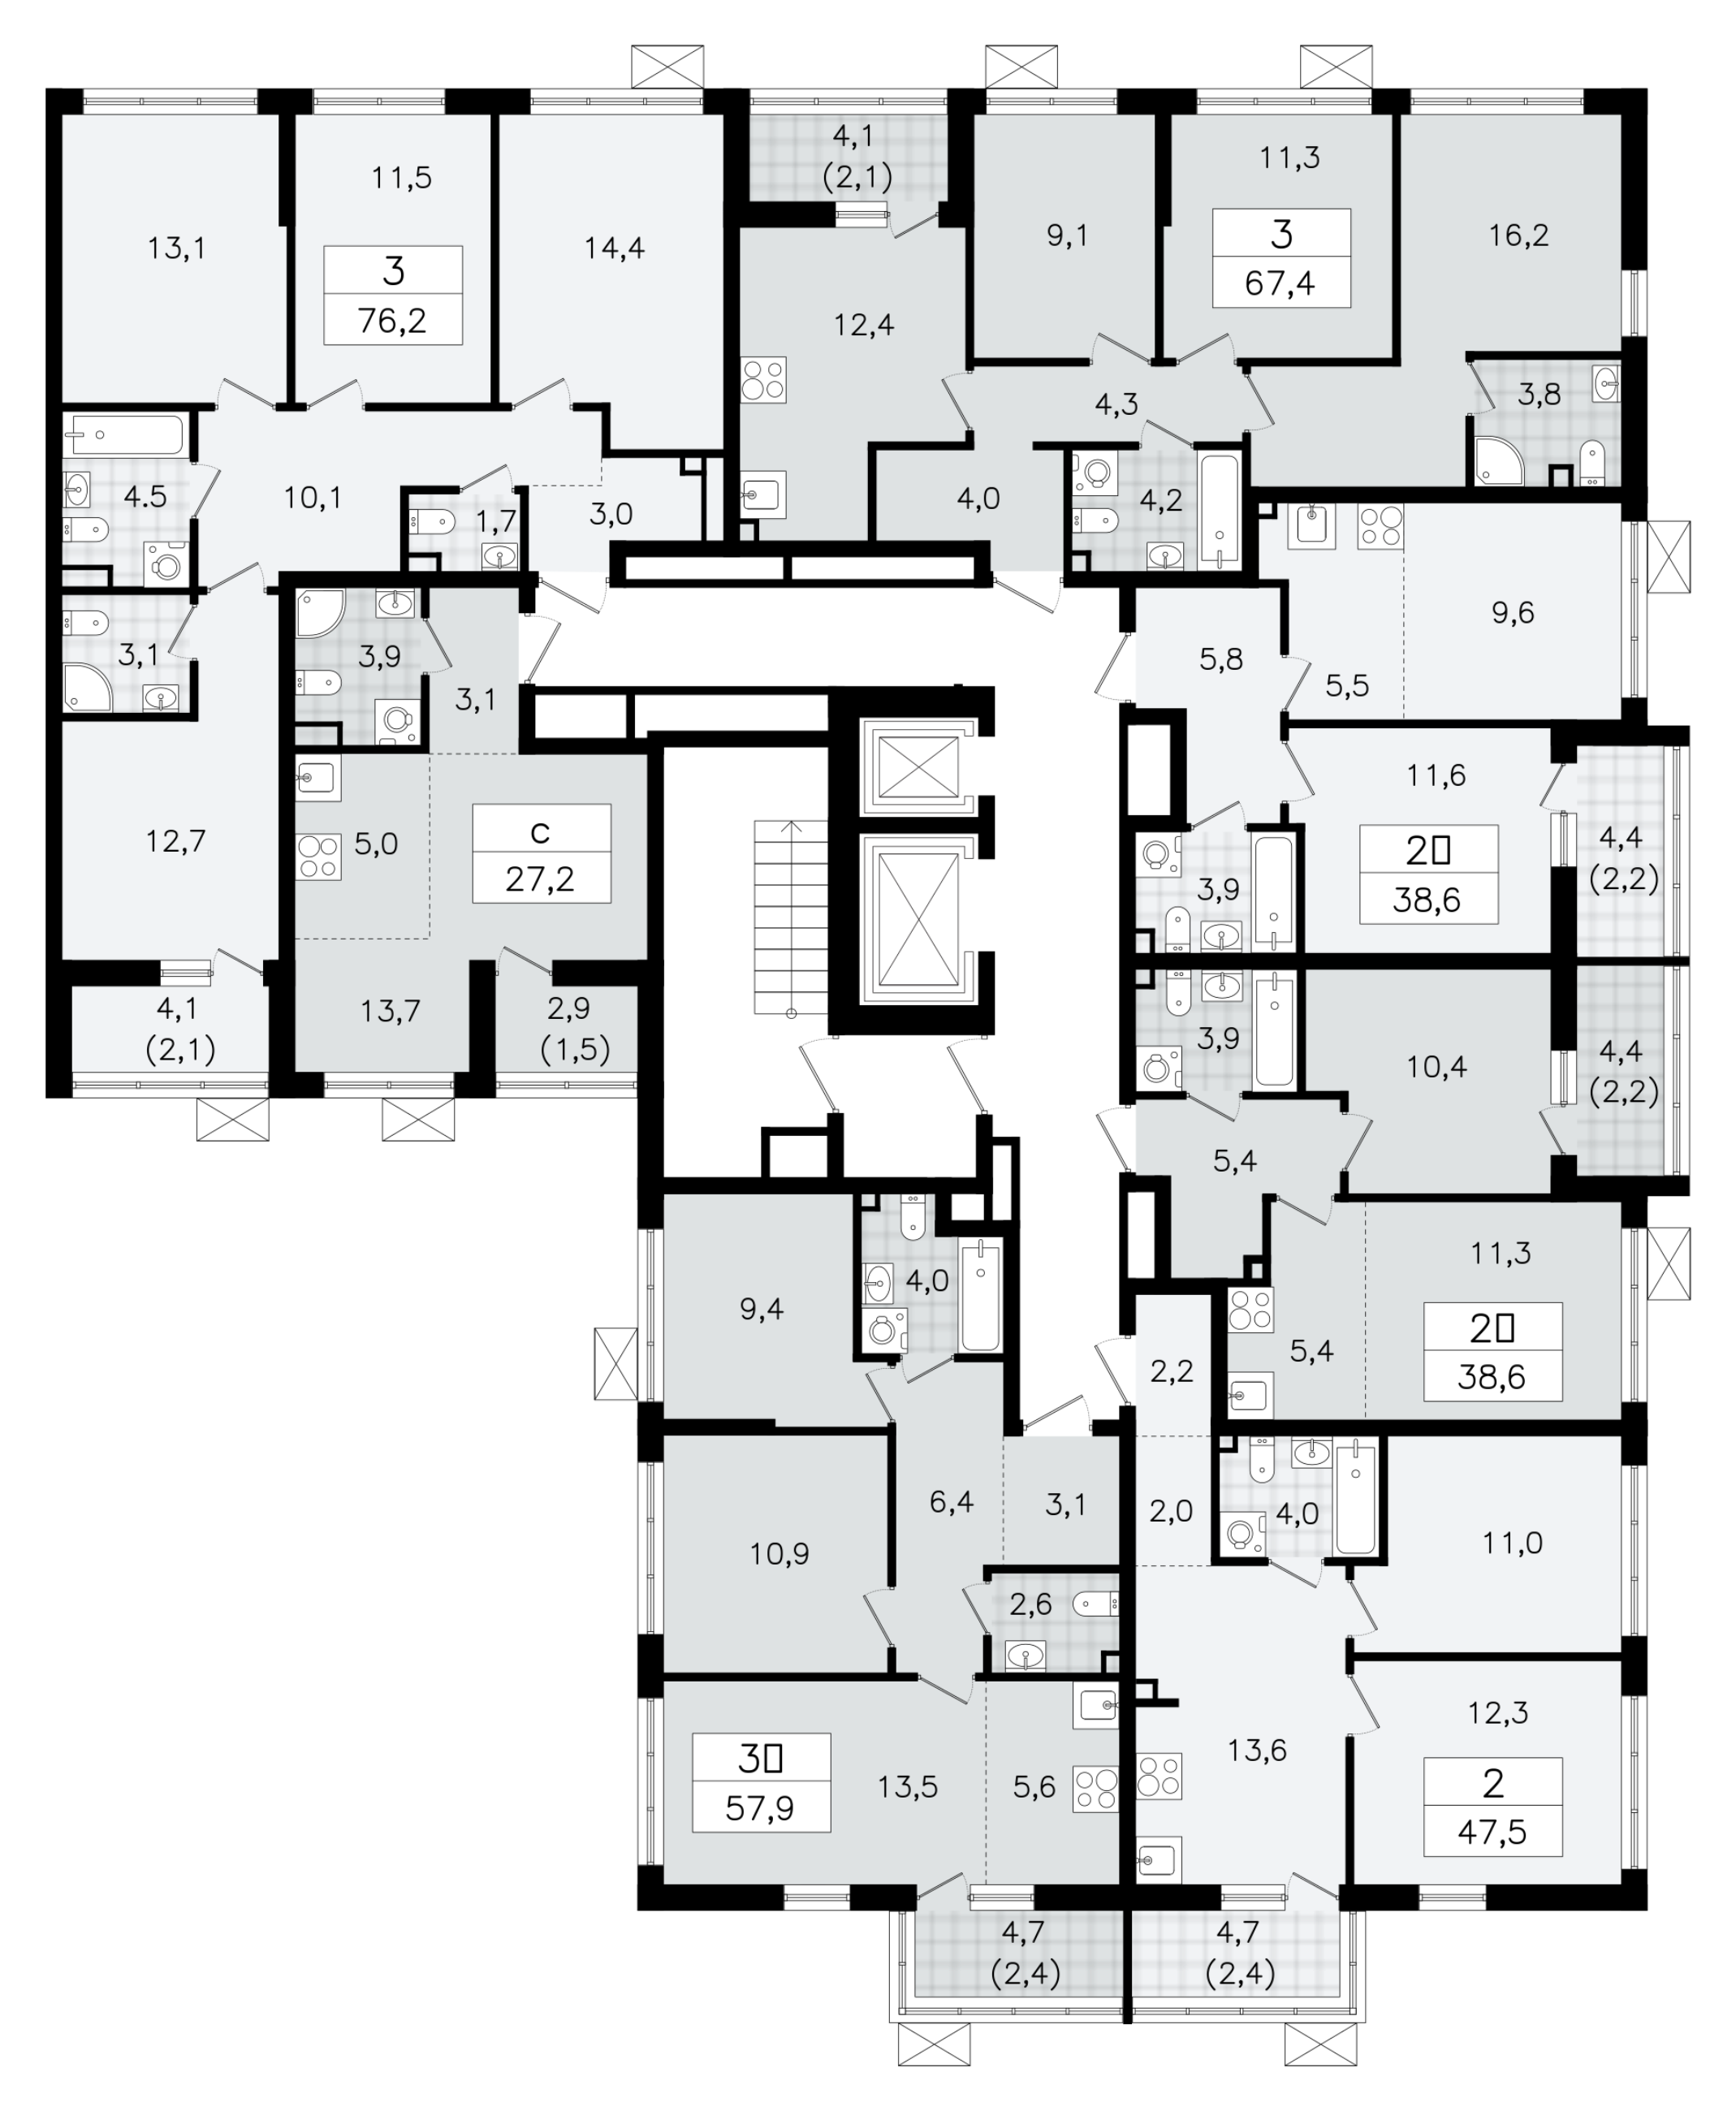 2-комнатная (Евро) квартира, 38.6 м² - планировка этажа